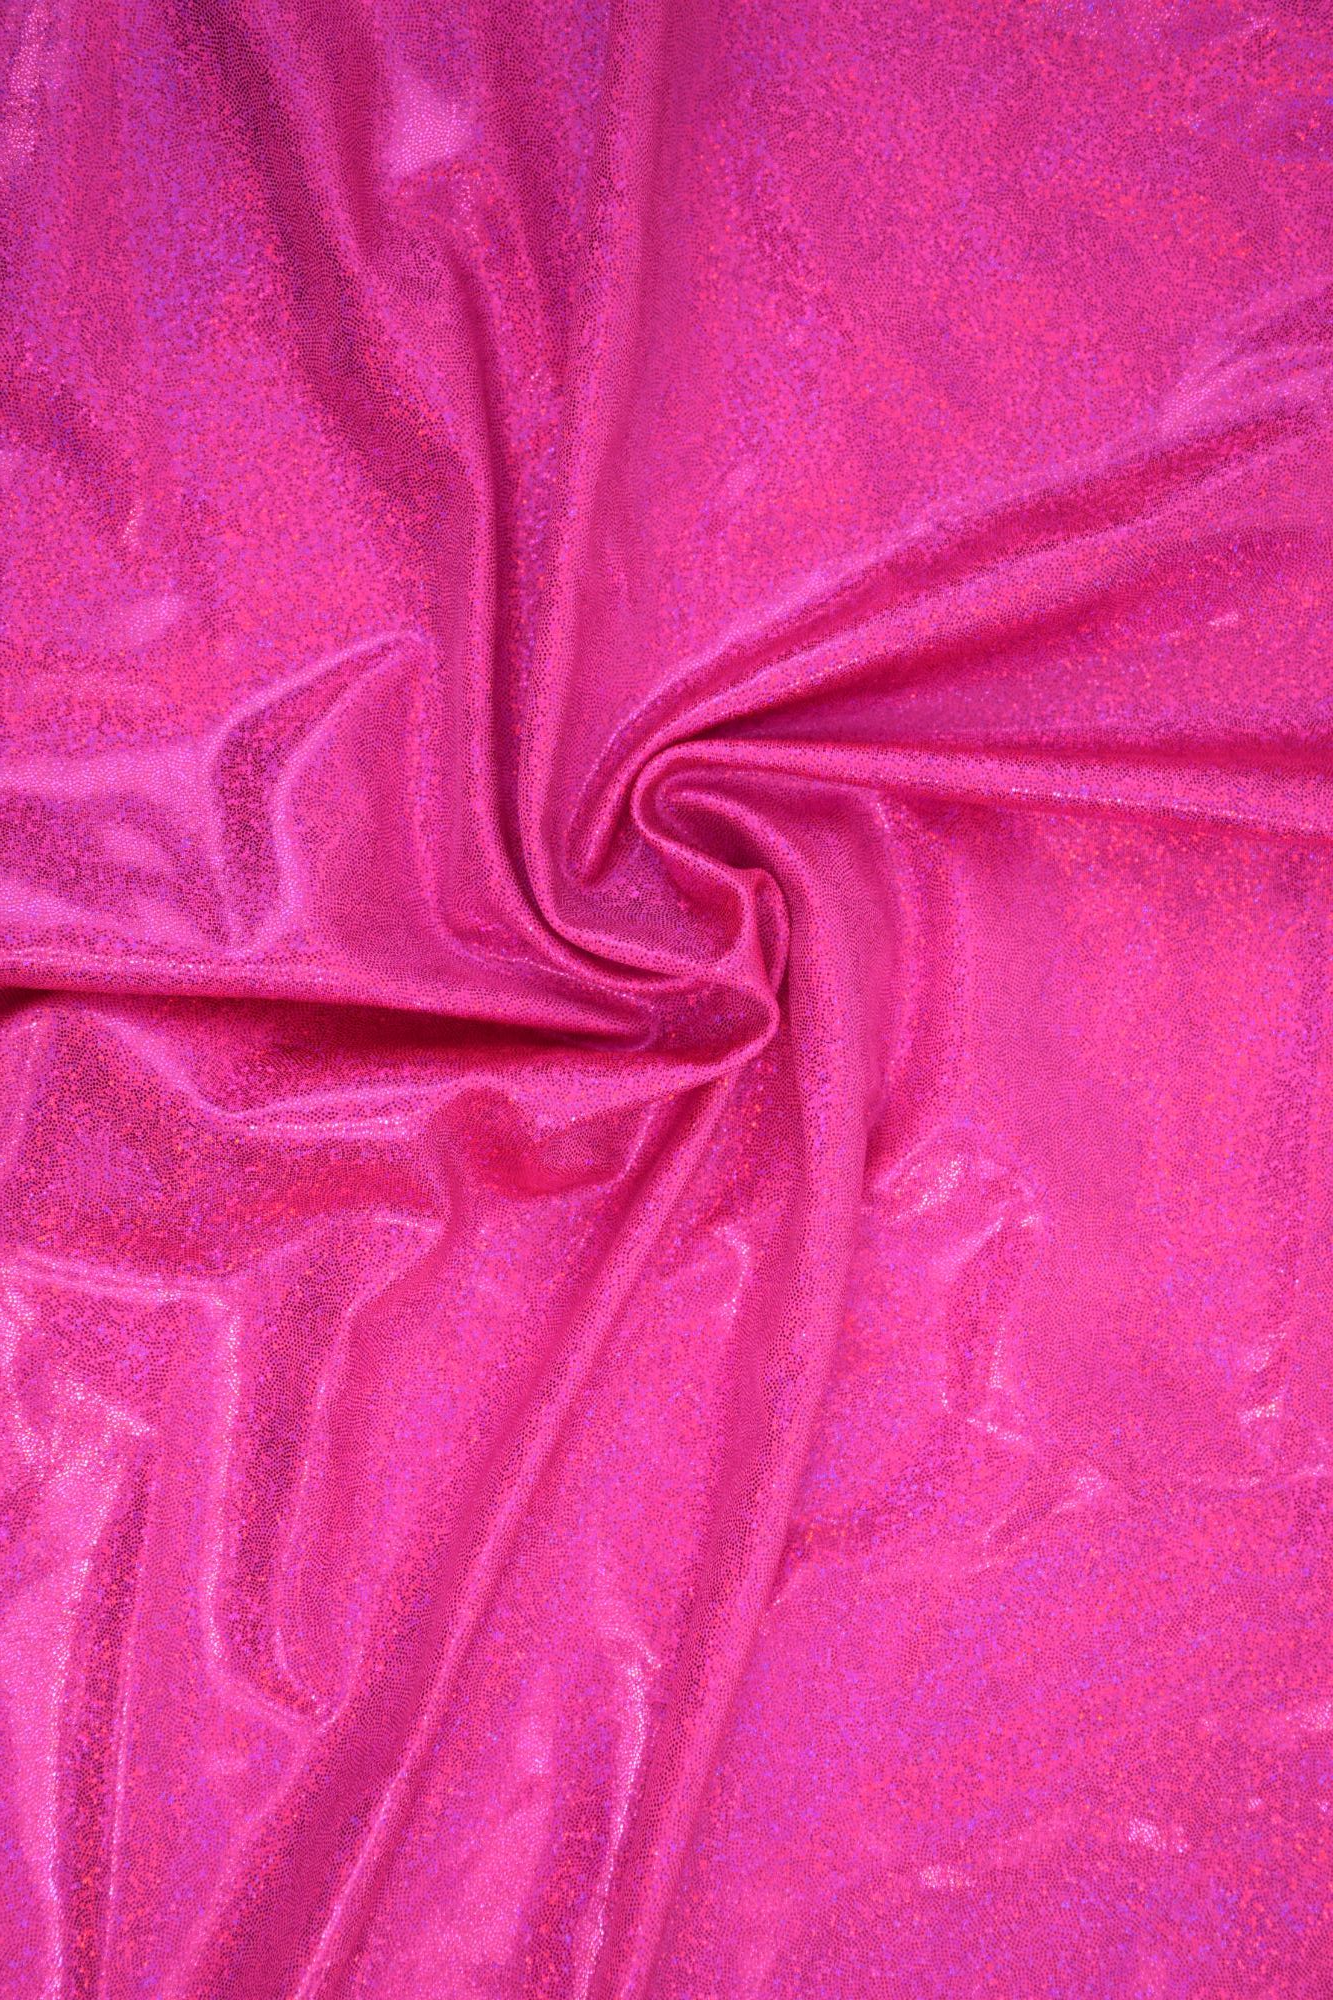 UV Neon Pink Sparkly Jewel